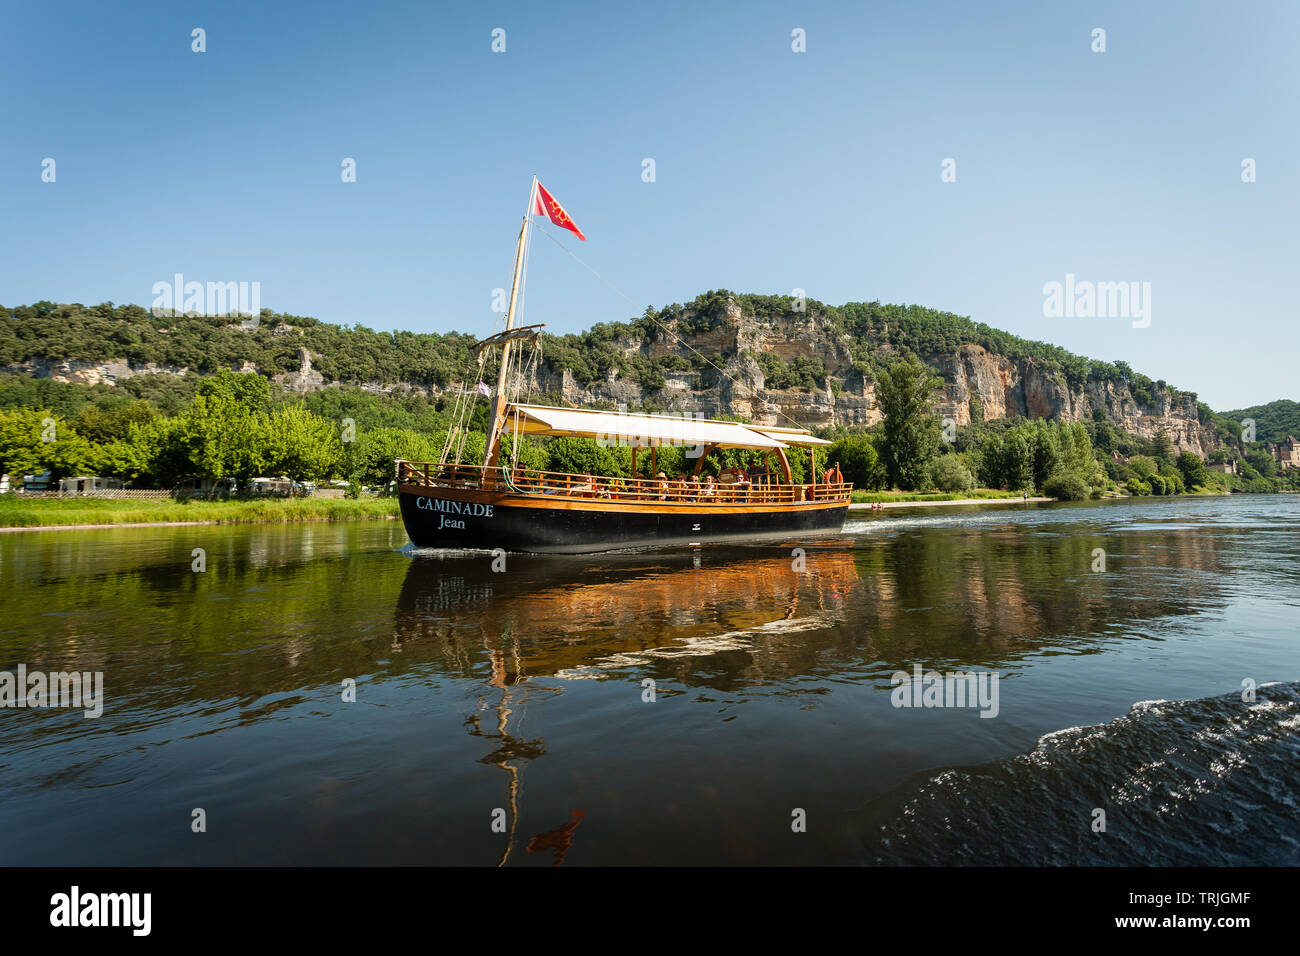 Gabare boat sailing on the Dordogne river, France Stock Photo